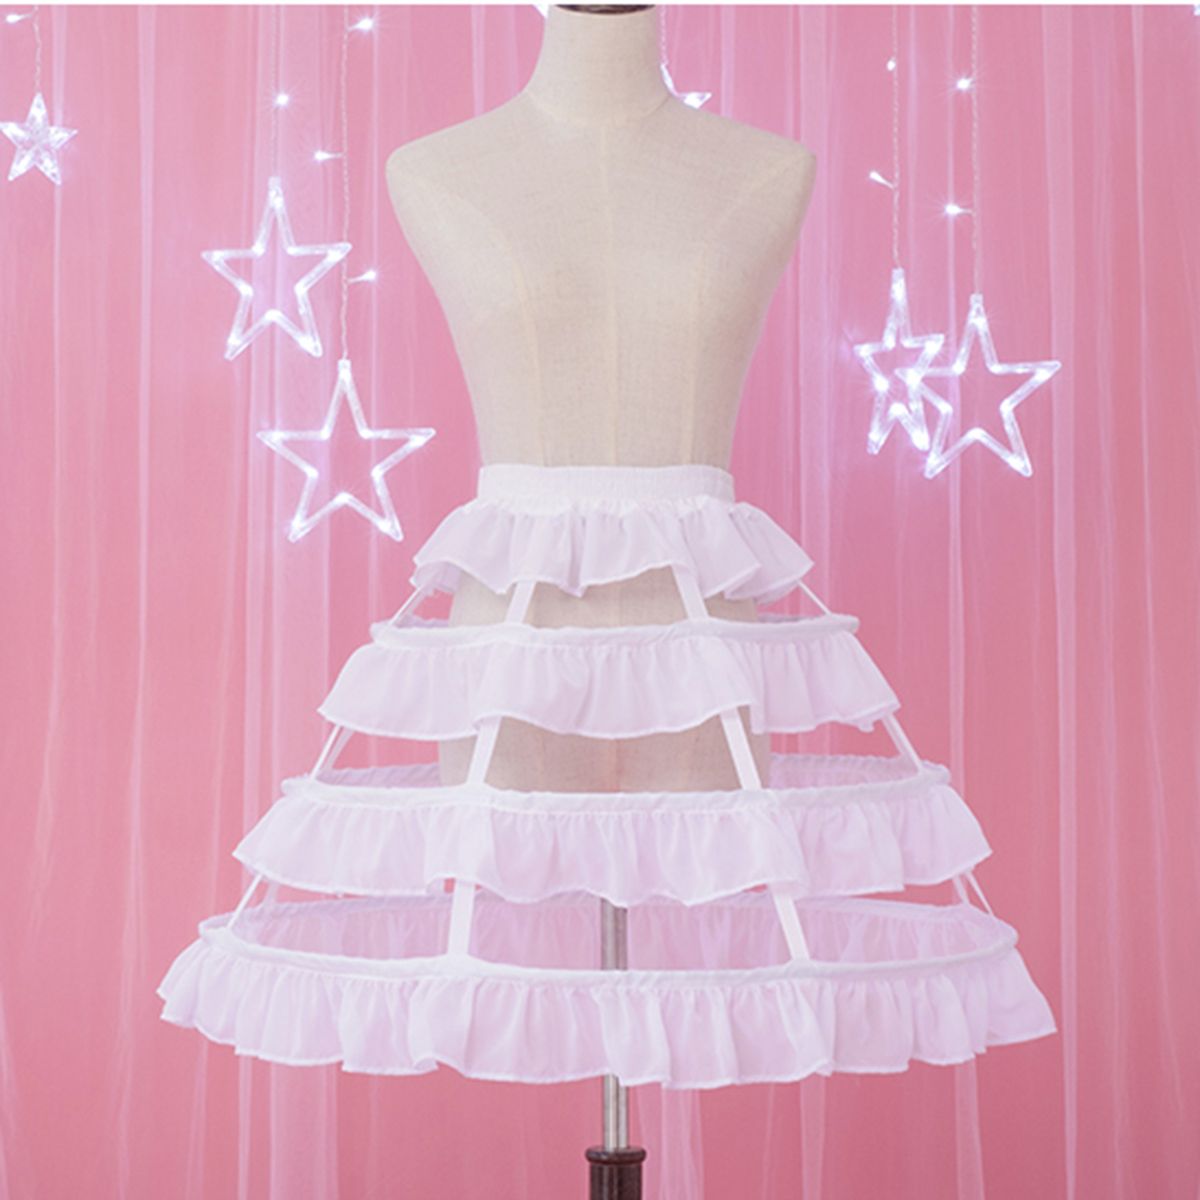 Lady-Hoop-Cage-Skirt-Pannier-Bustle-Crinoline-Petticoat-Underskirt-Dress-Costume-1540258